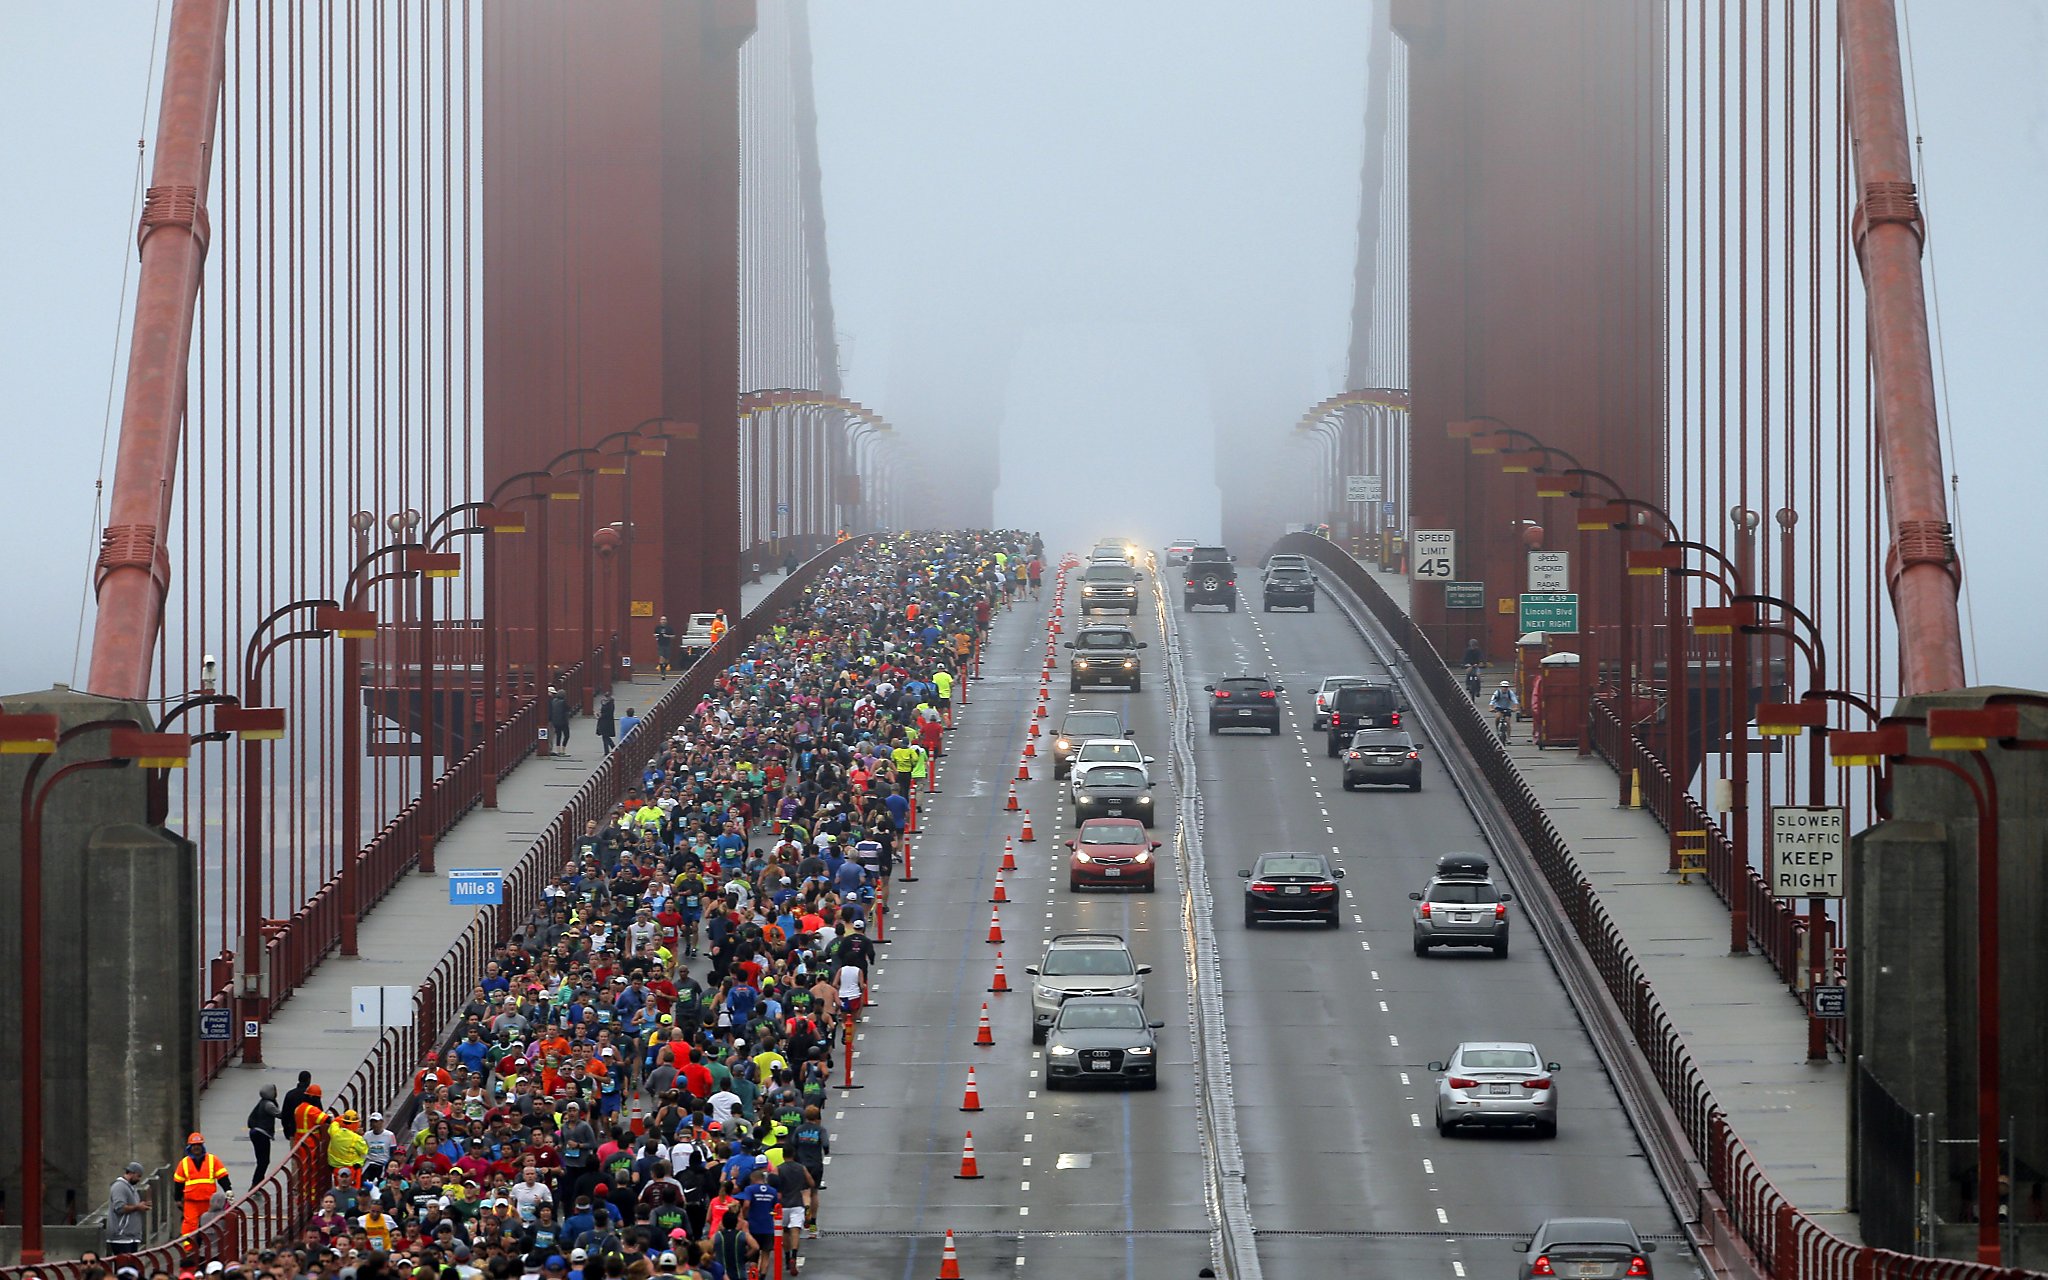 Golden Gate Bridge terror fears put SF Marathon on shaky footing - San Francisco Chronicle